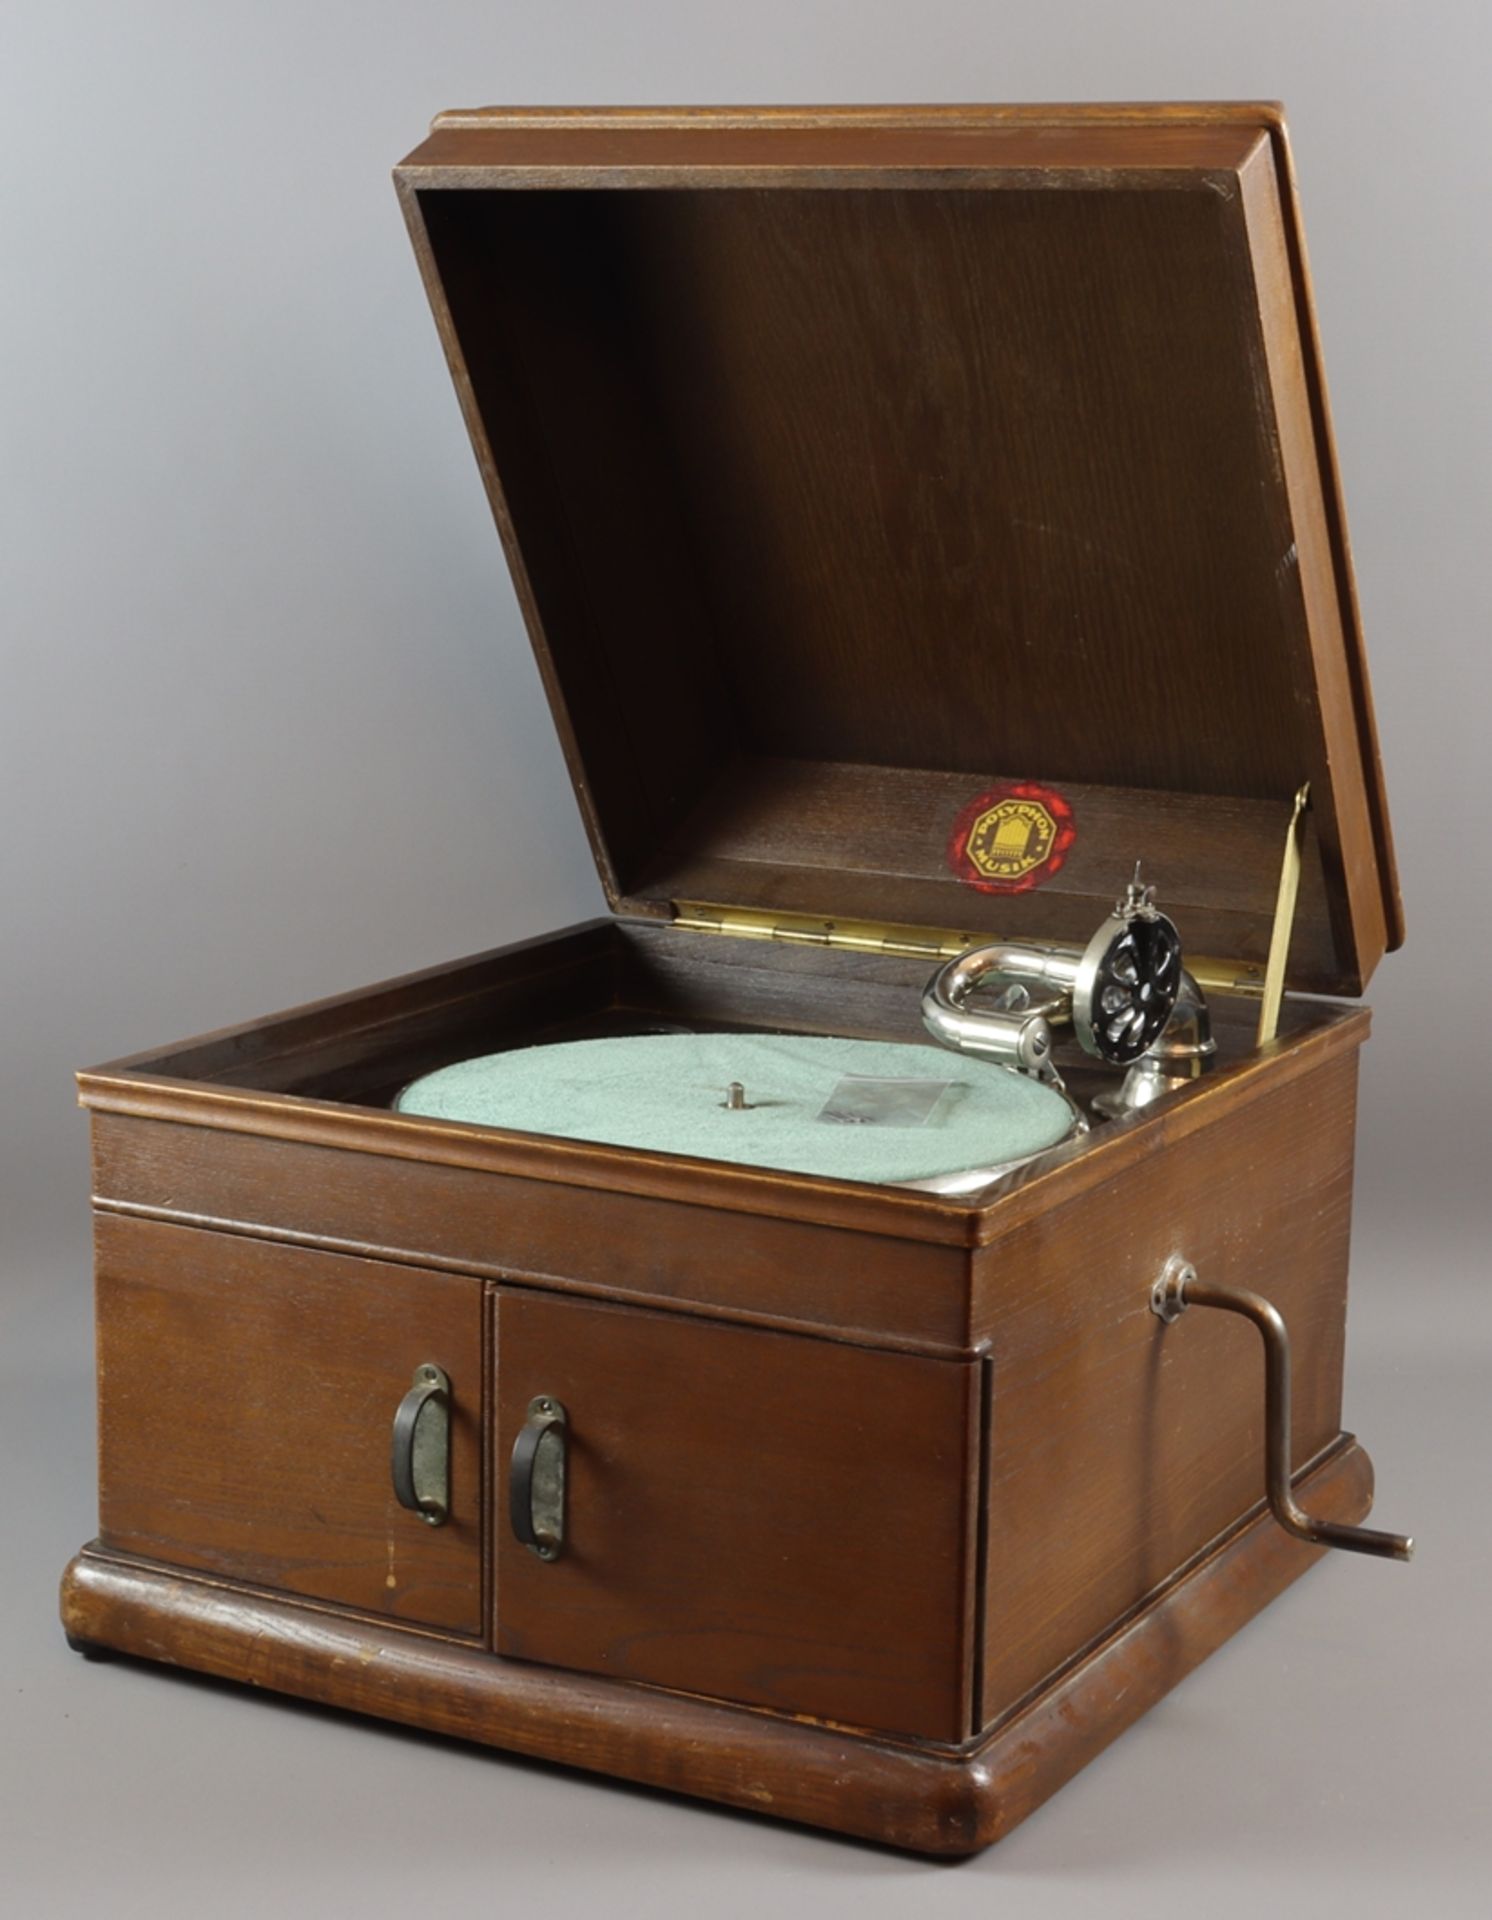 Grammophone make Polyphon circa 1910 - 1930, German - Image 5 of 5